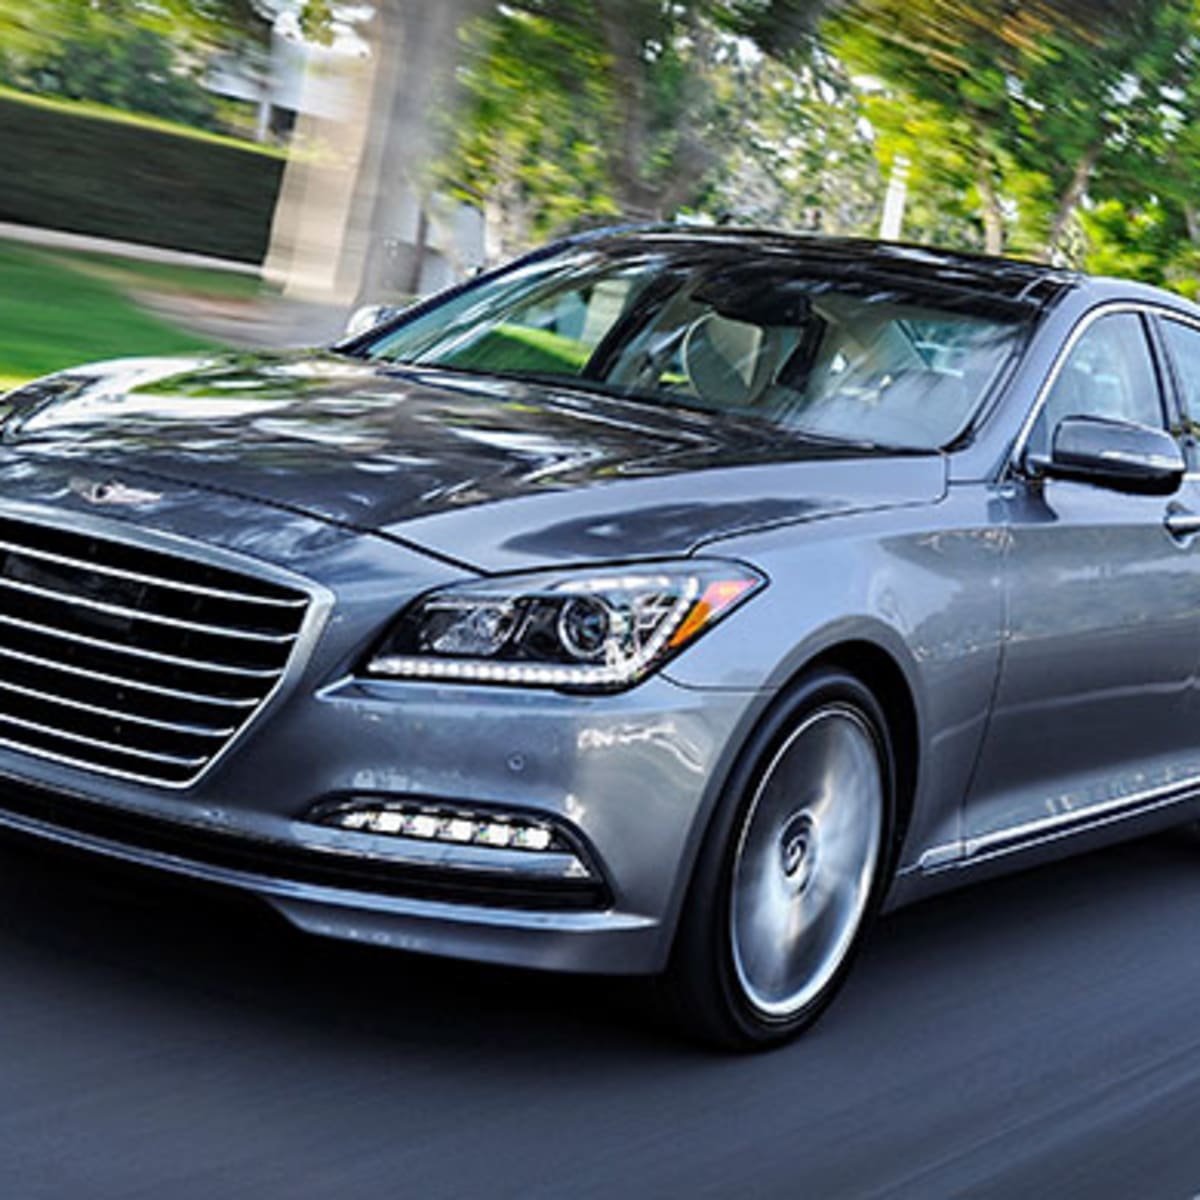 Hyundai Enters Luxury Car Market With New Genesis Brand - TheStreet